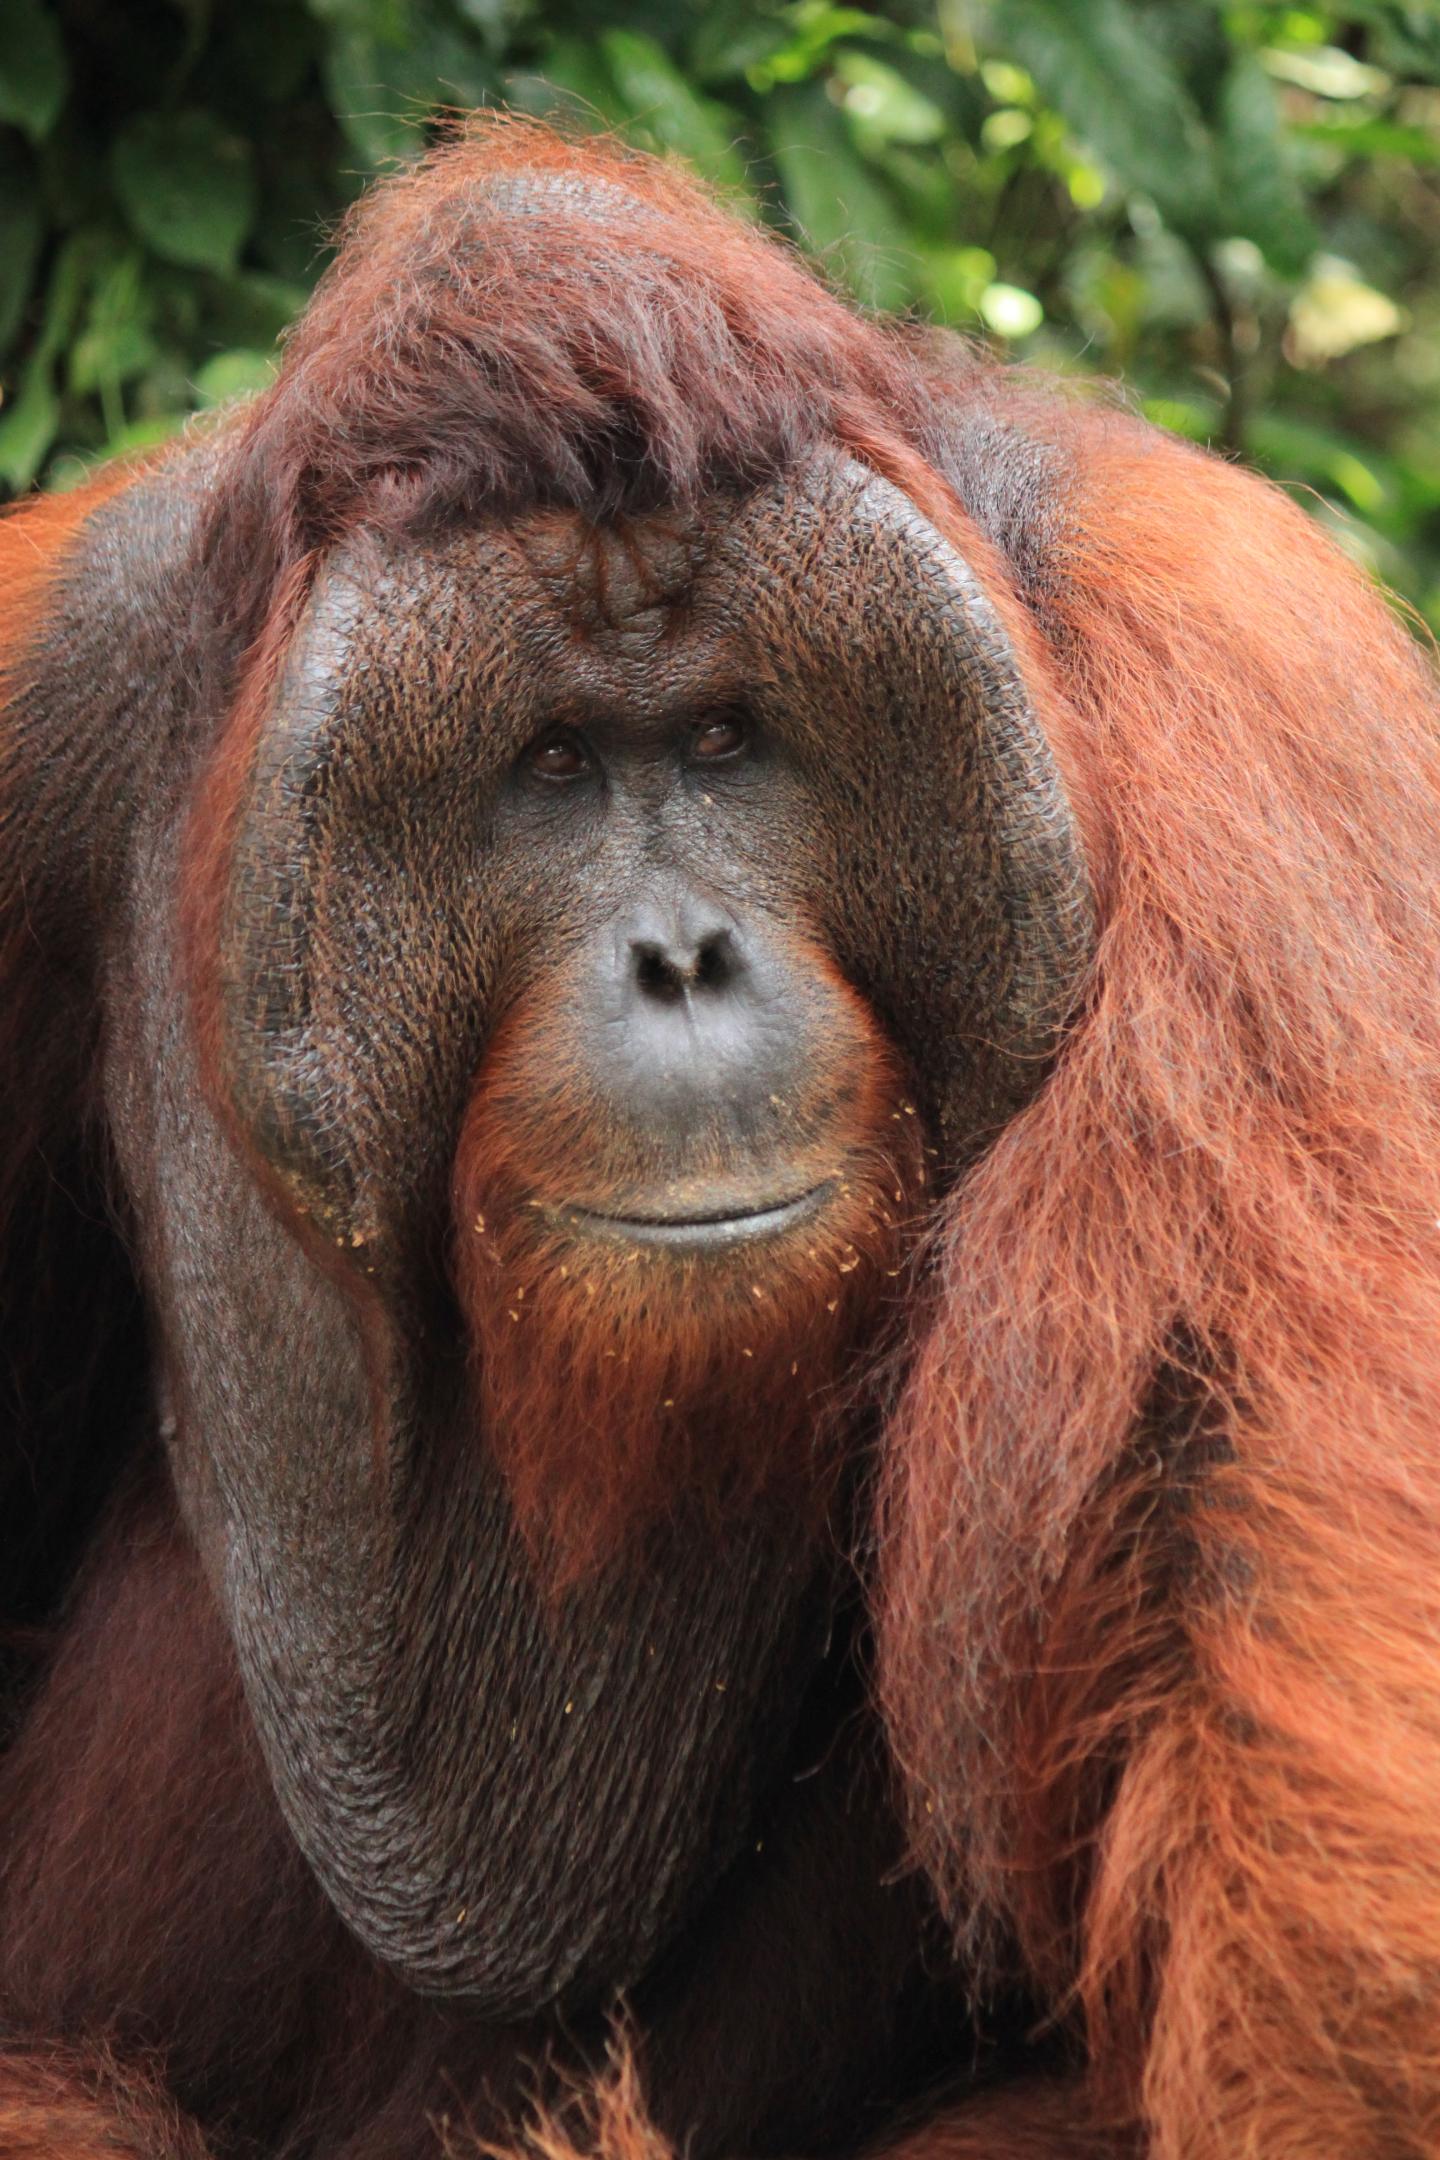 Orangutan Females Prefer Cheek-Padded Males